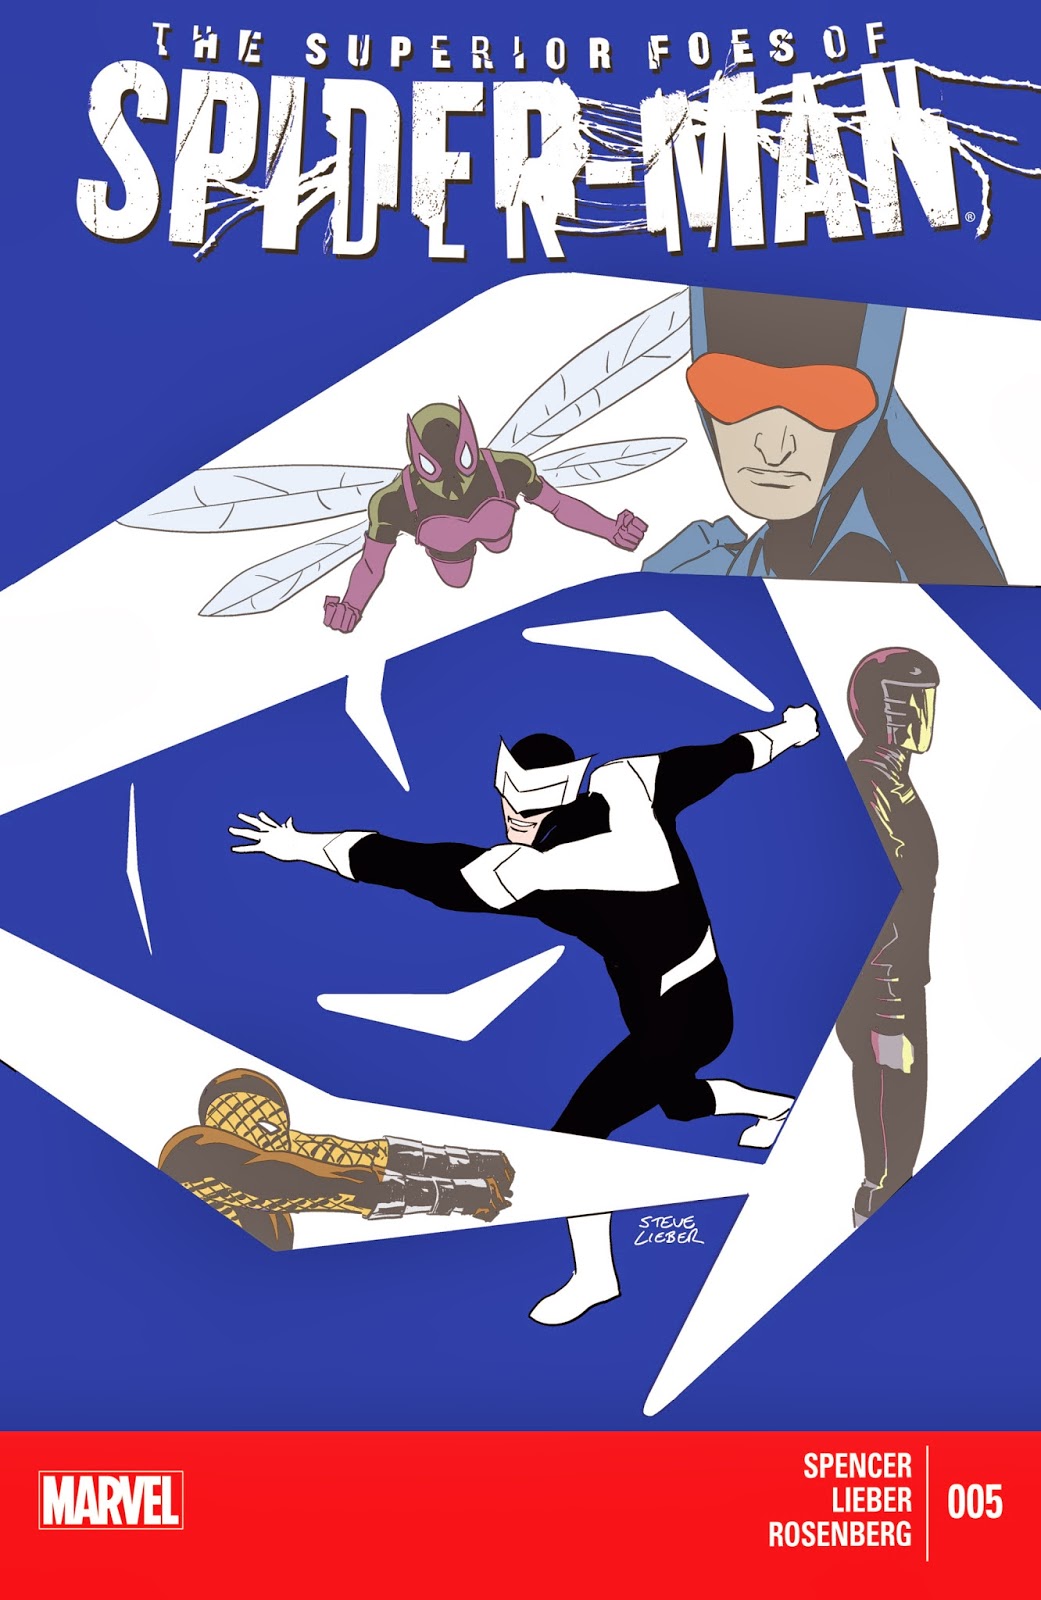 Steve Lieber's artwork on the cover of Marvel's "Superior Foes" #5